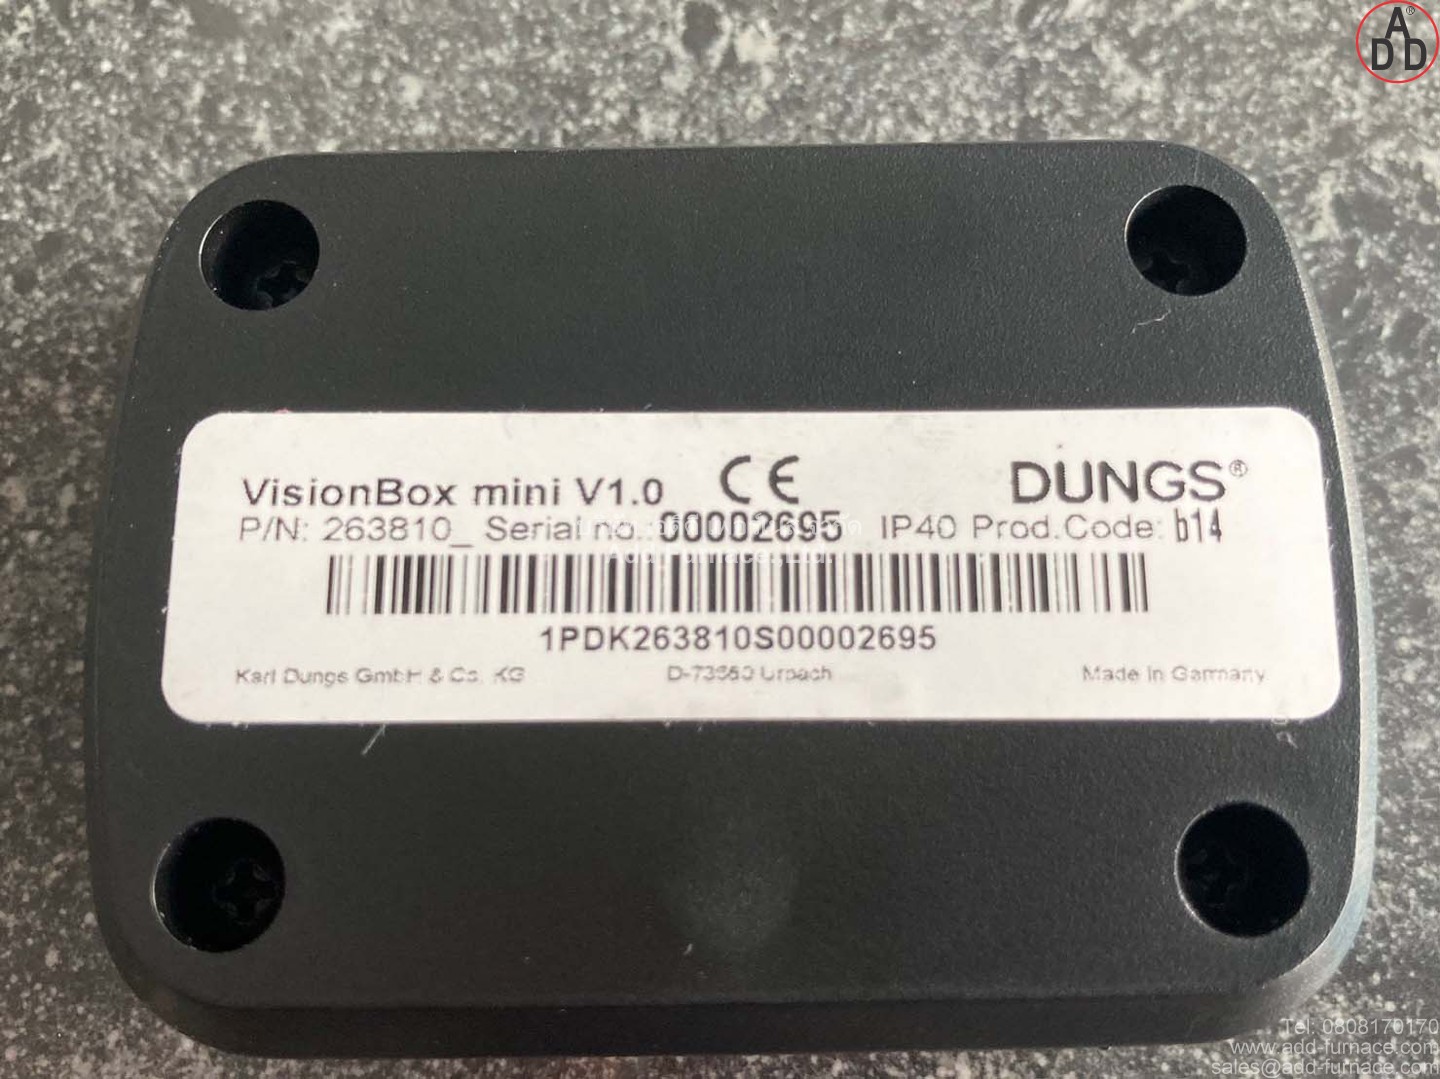 Dungs VisionBox mini V1.0 (8)